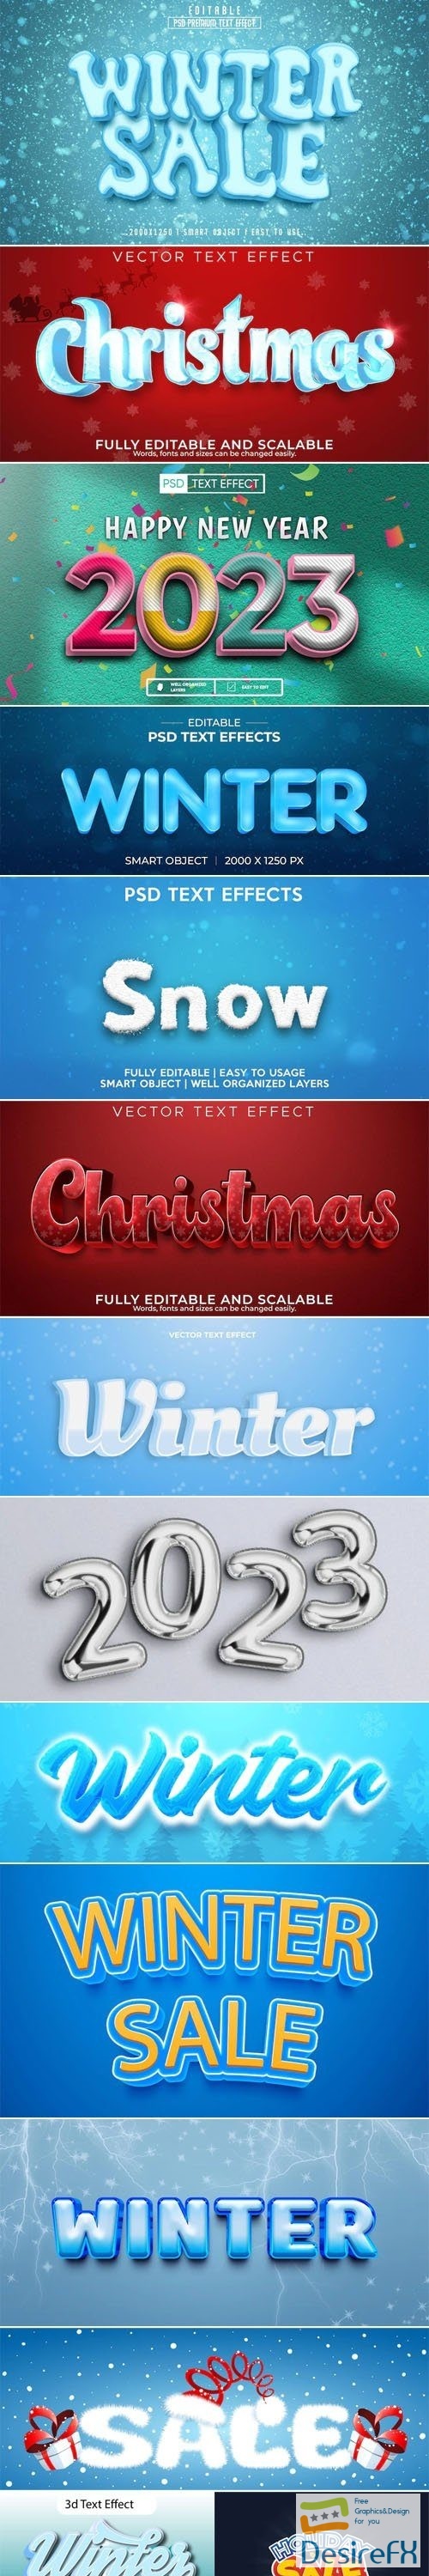 10+ Winter Season & Holidays Text Effects for Photoshop & Illustrator